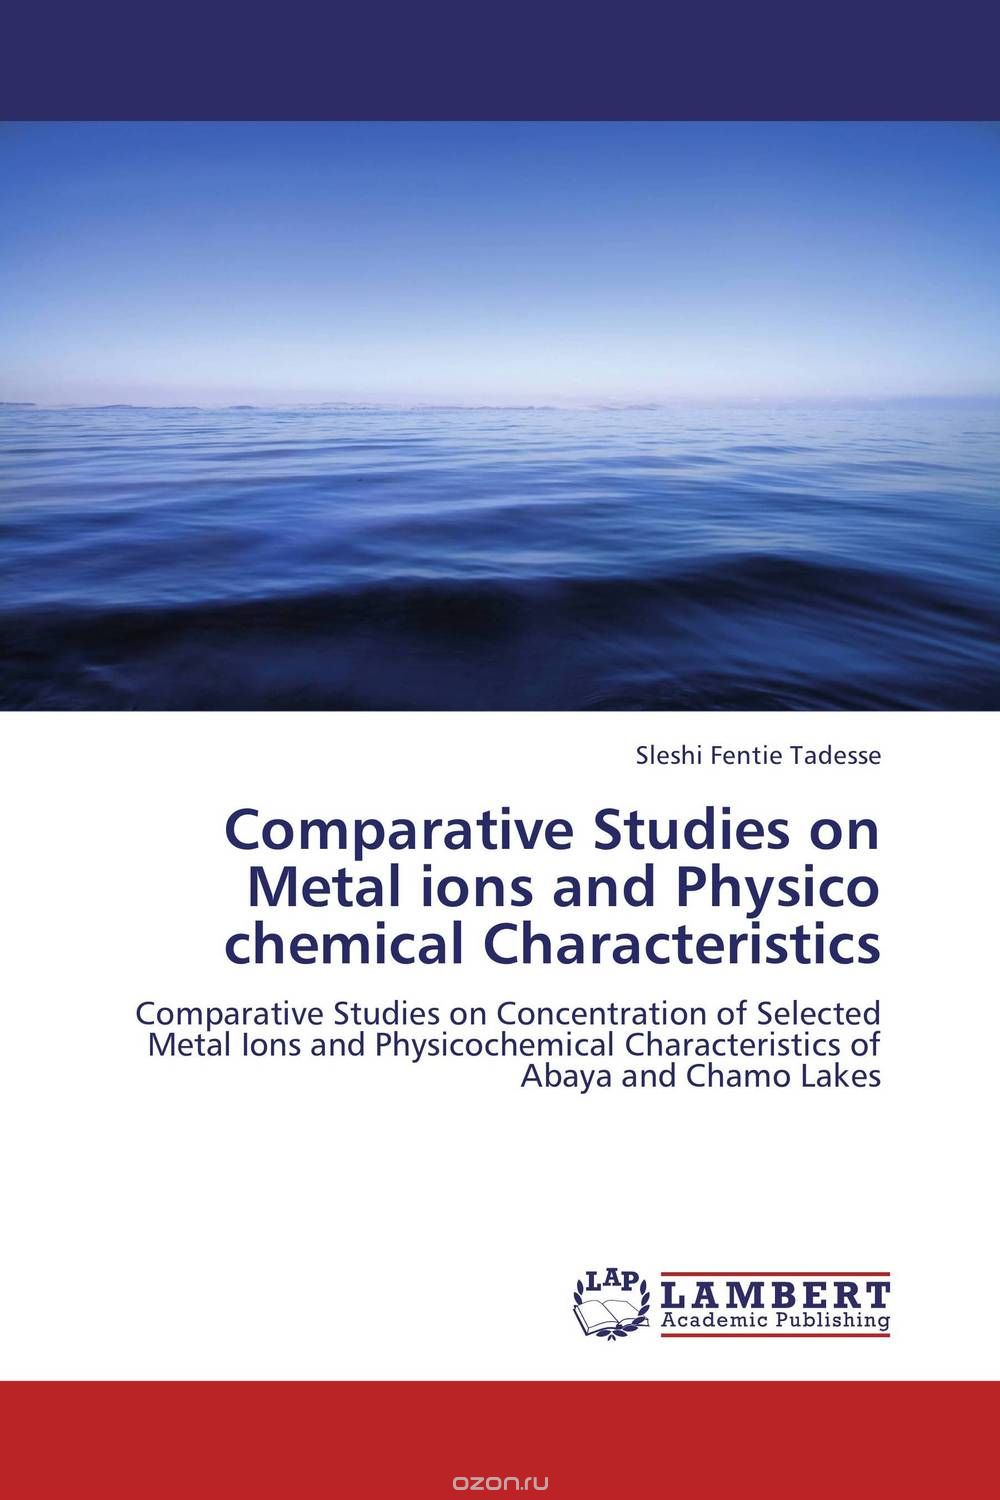 Скачать книгу "Comparative Studies on Metal ions and Physico chemical Characteristics"